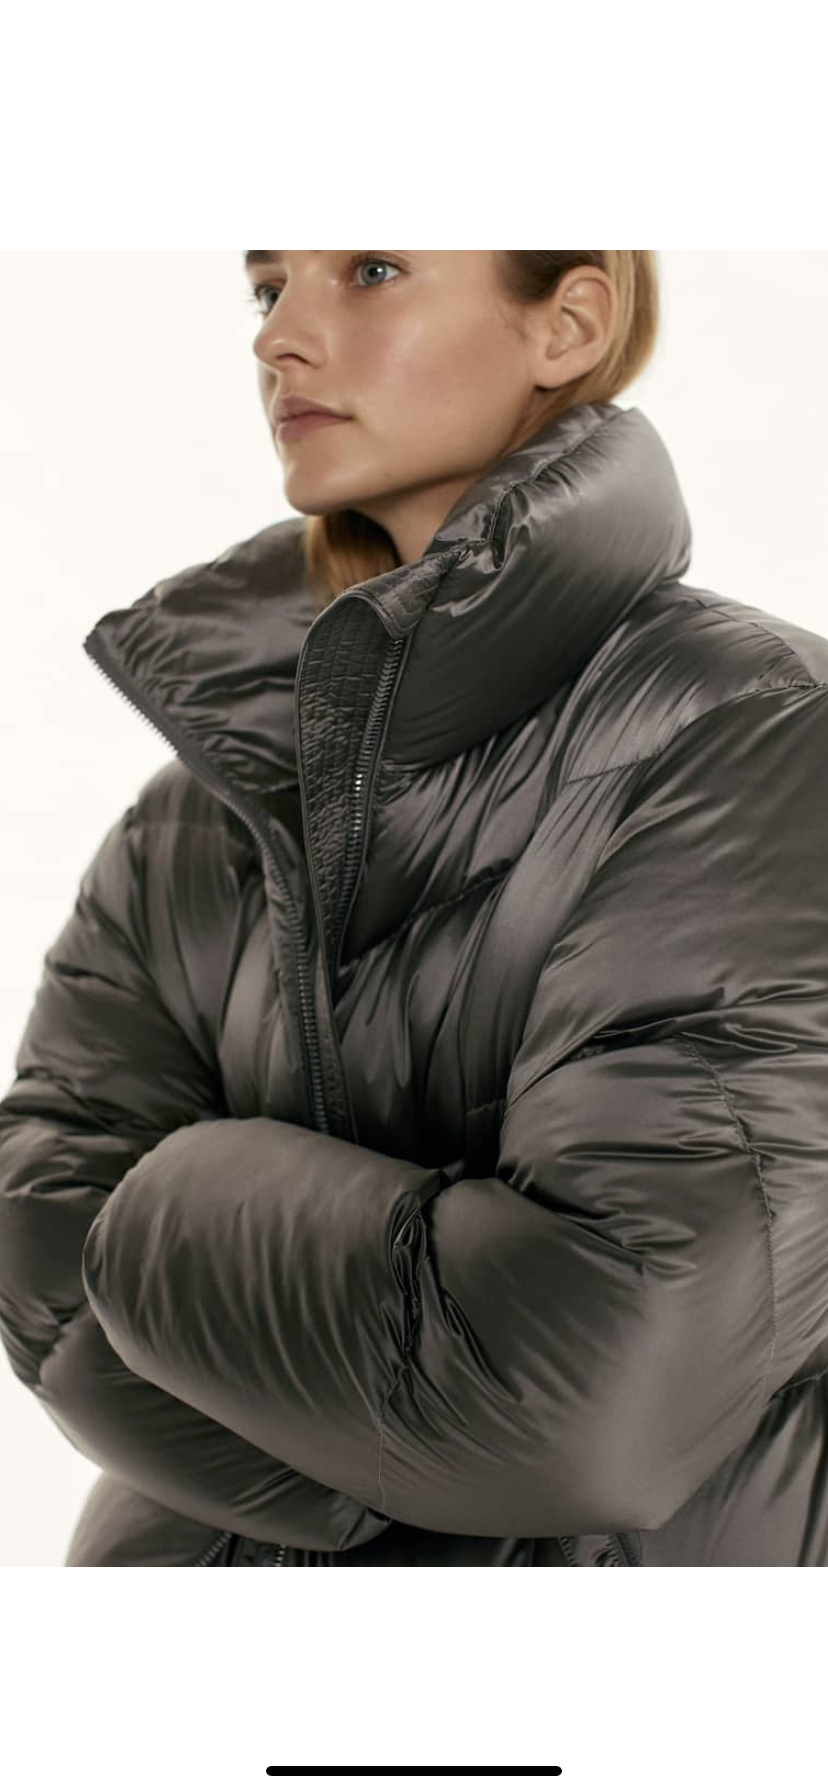 Пуховик куртка Massimo Dutti 46 (L)